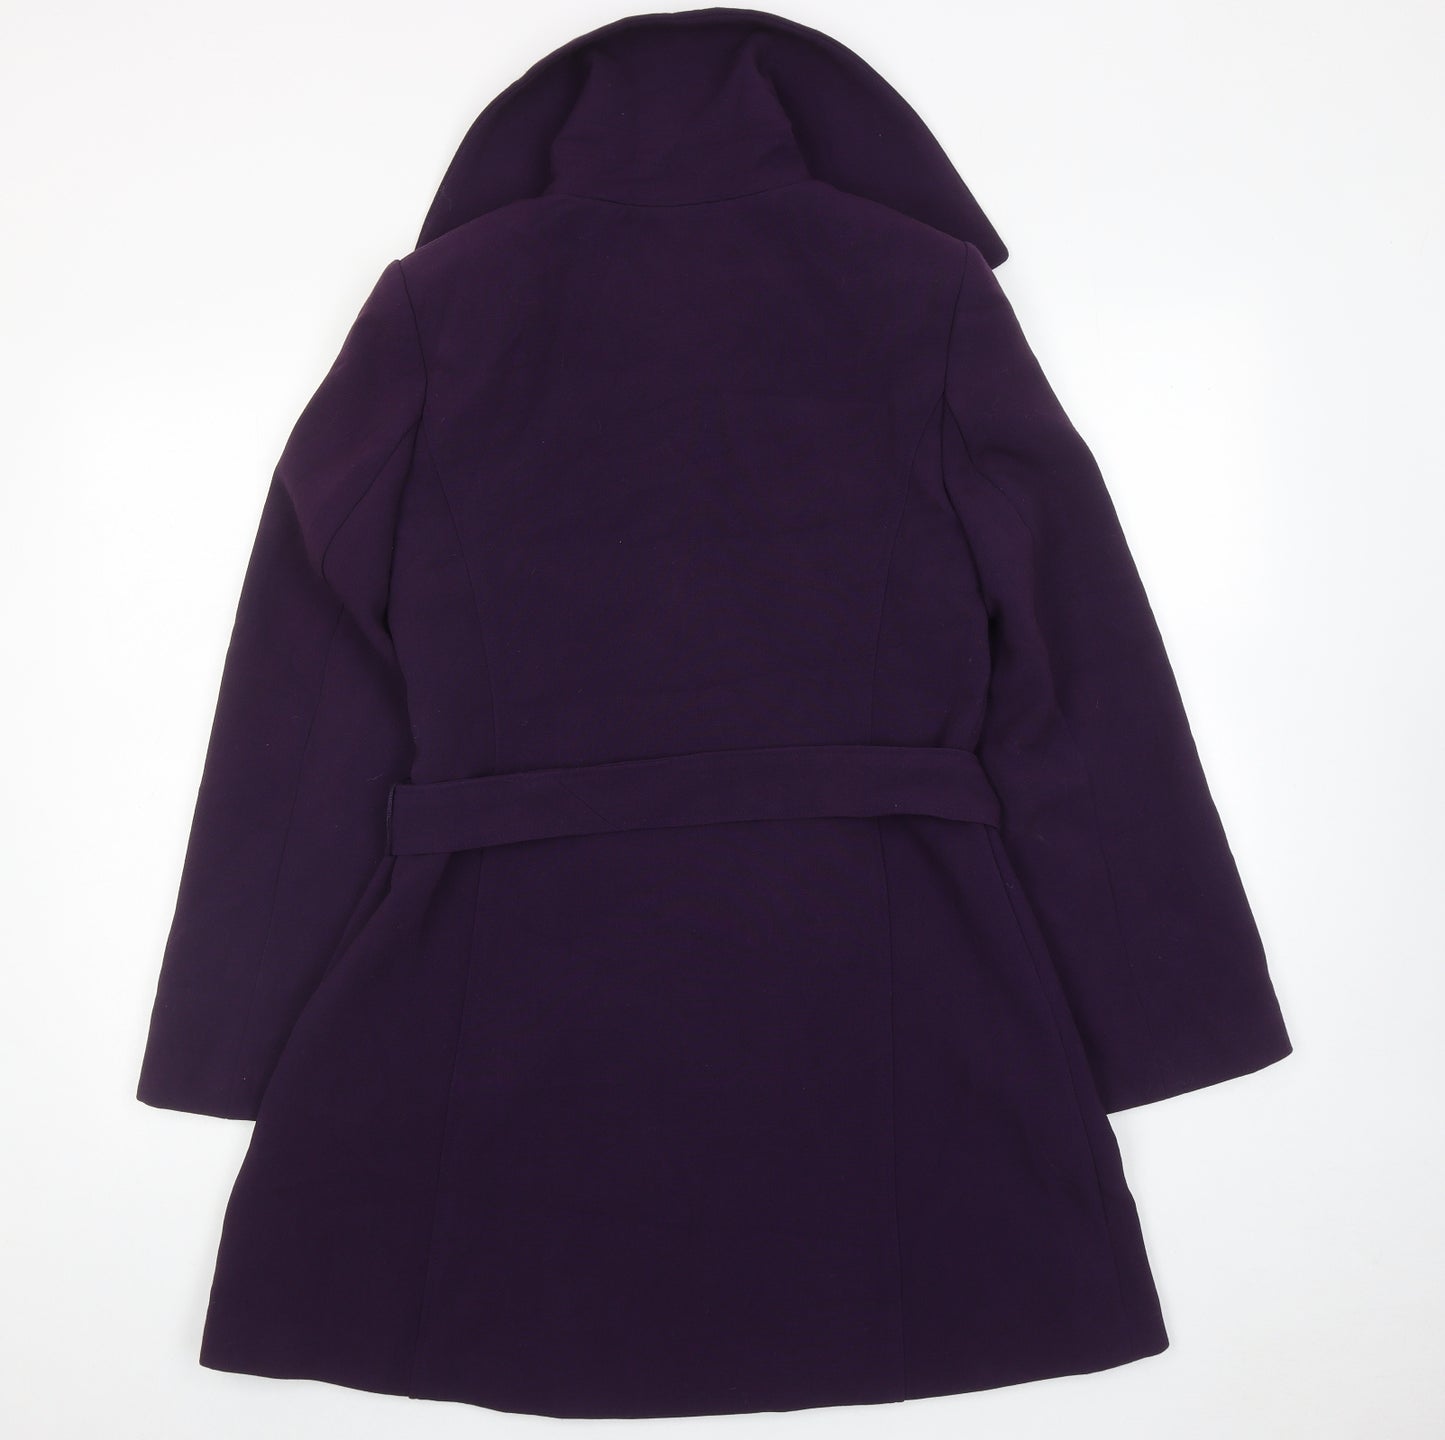 Sophie Gray Womens Purple Overcoat Coat Size 10 Button